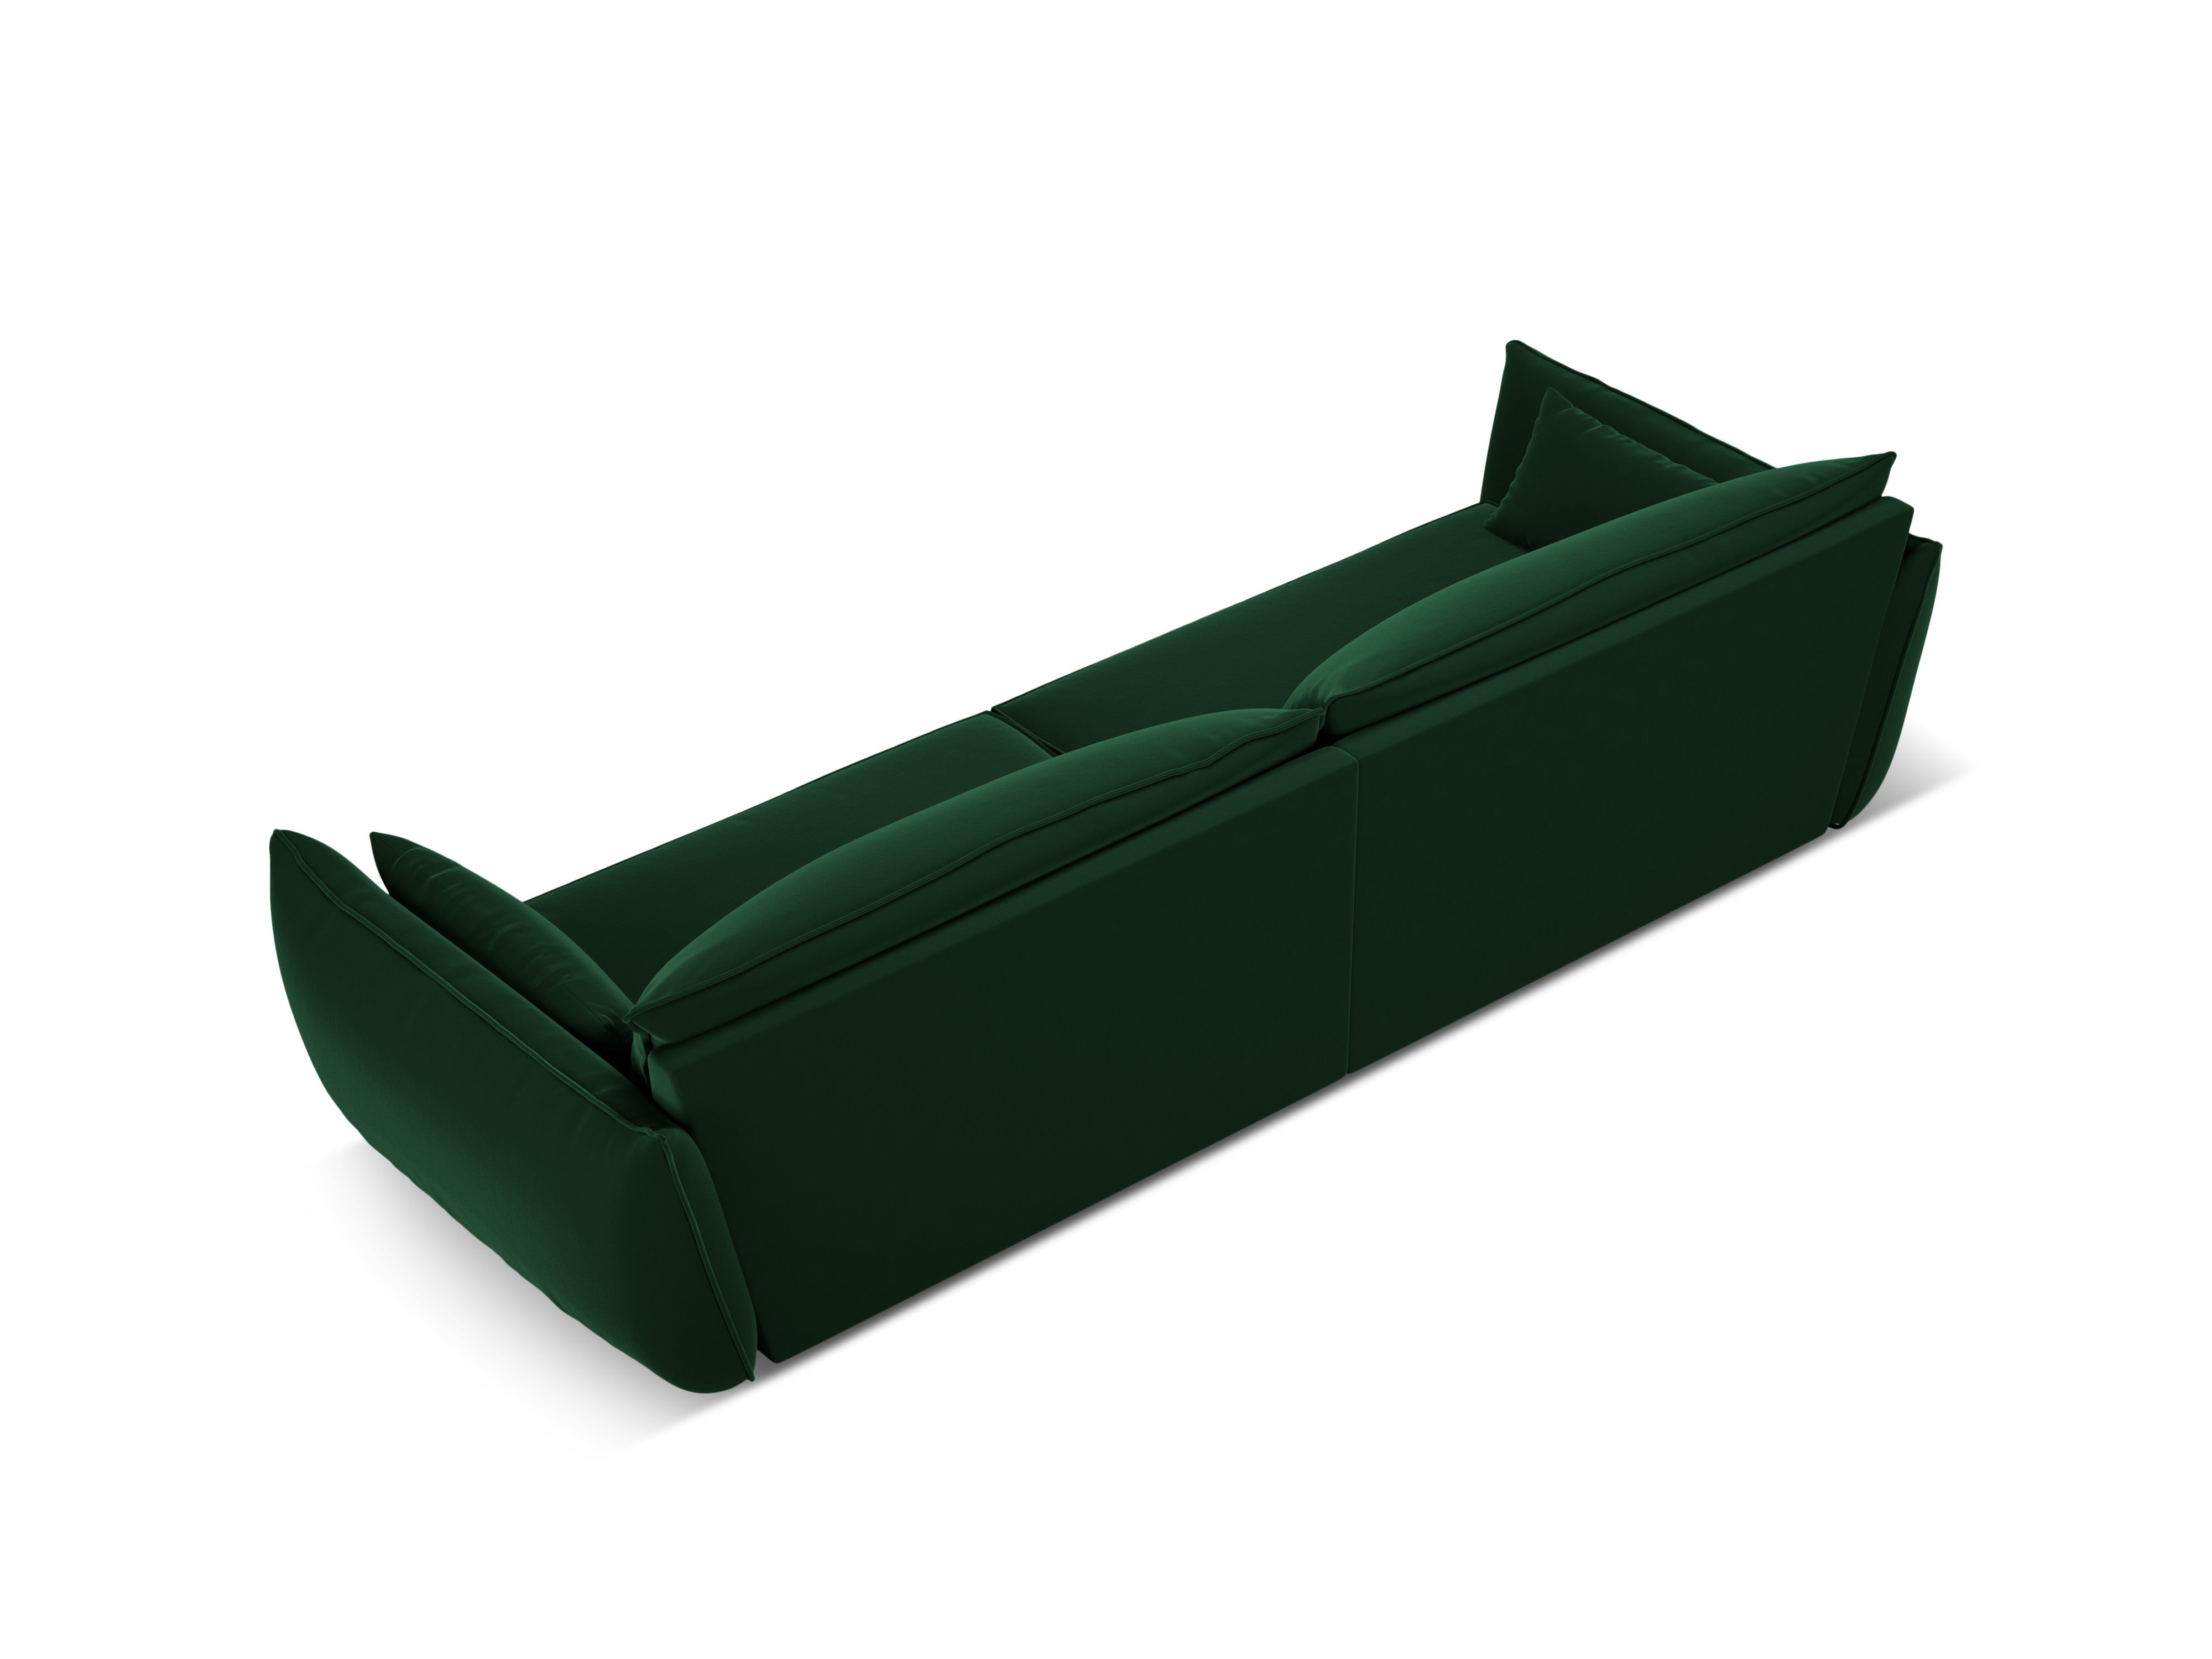 Sofa aksamitna 4-osobowa VANDA butelkowa zieleń Mazzini Sofas    Eye on Design